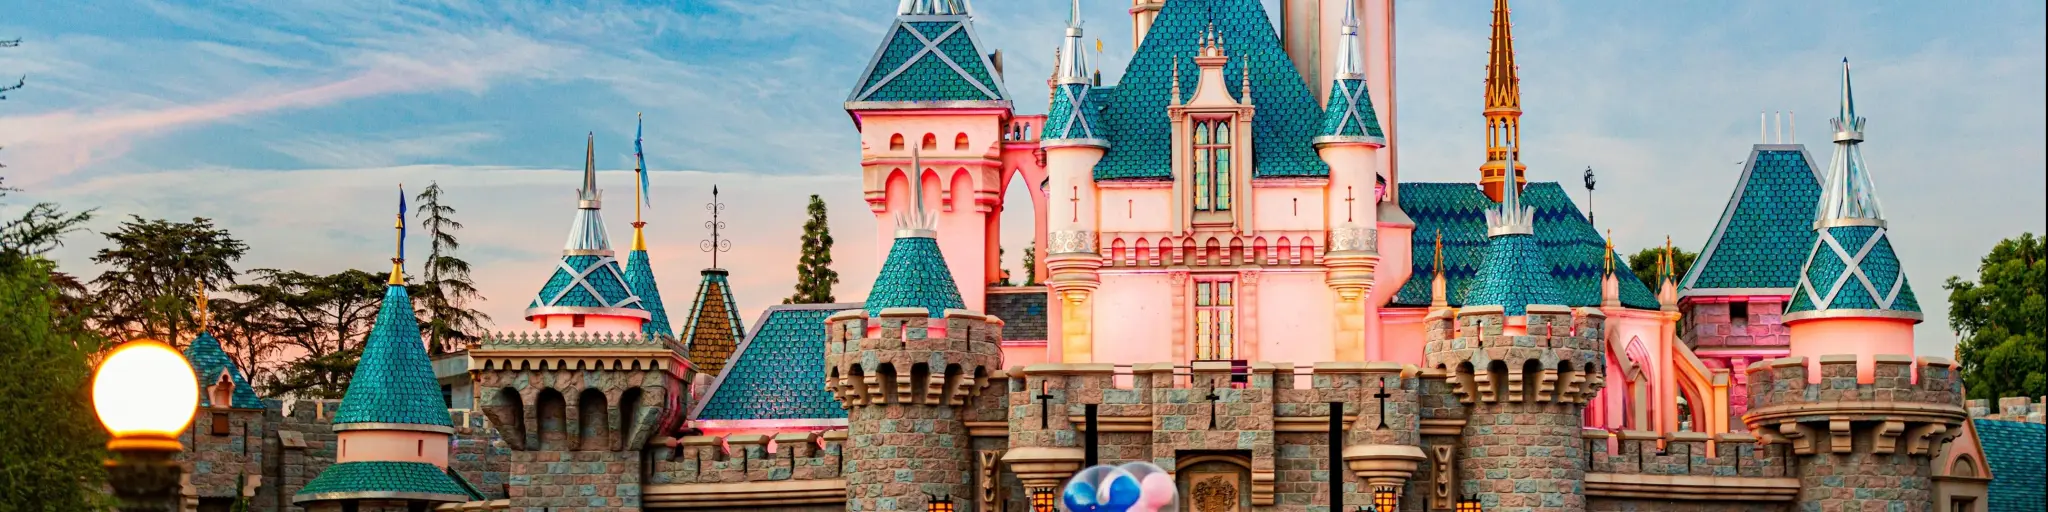 Disney castle of sleeping beauty in Disneyland surrounded by crowds of people